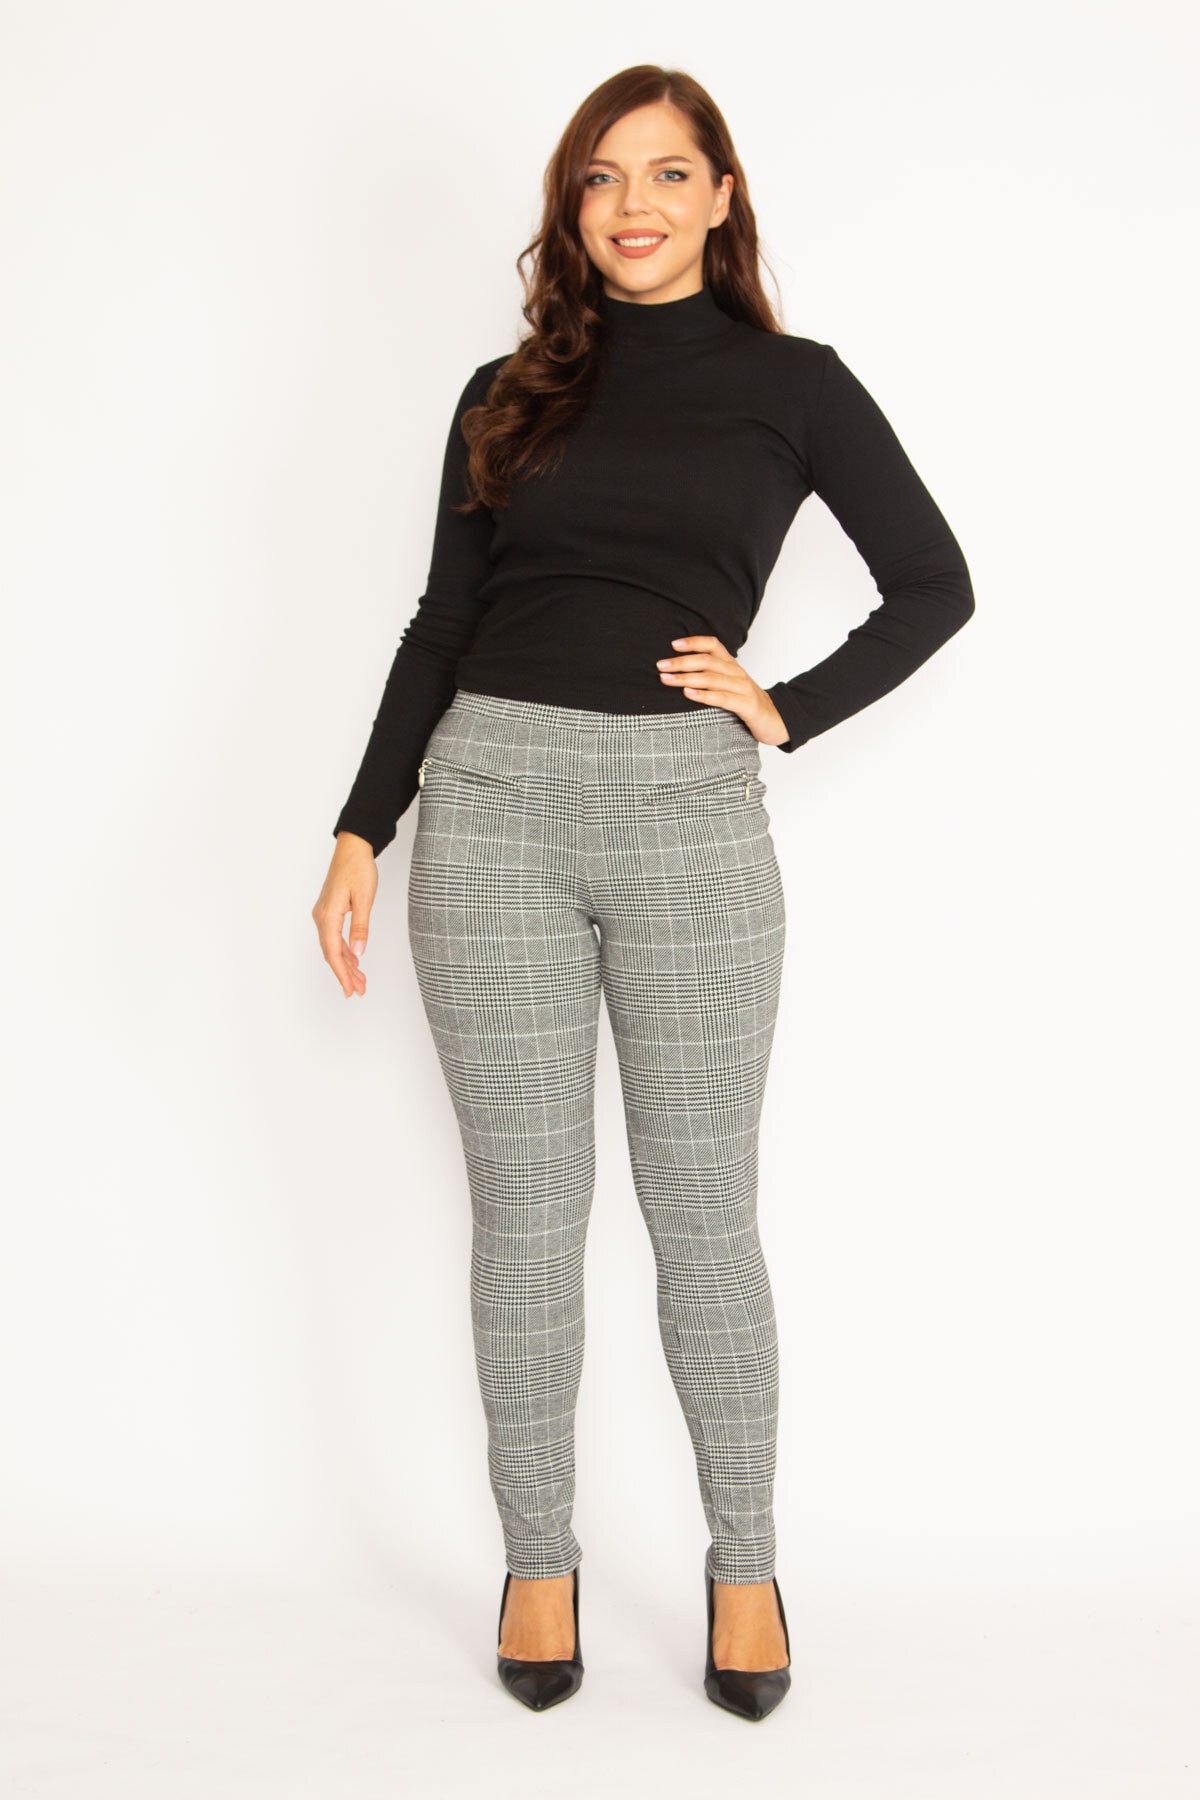 Şans Women's Plus Size Gray Plaid Patterned Leggings With Zippered Ornamental Pockets